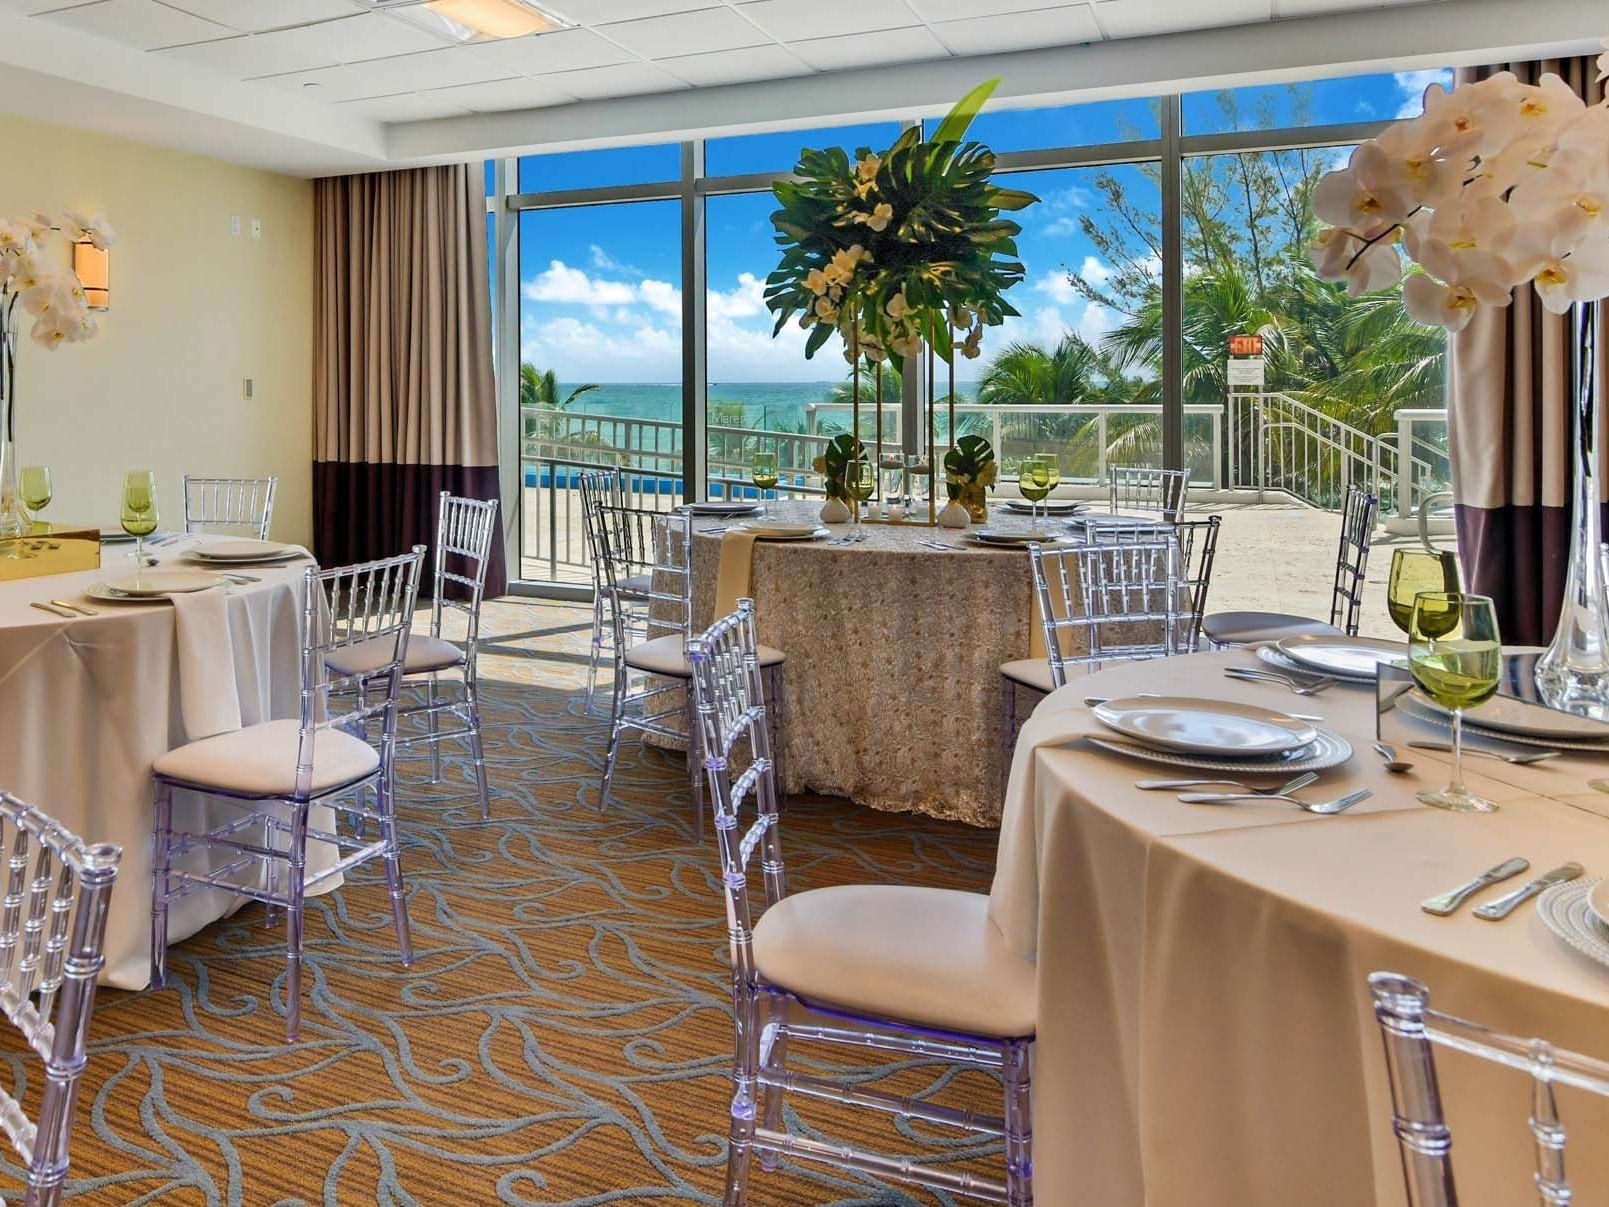 Banquet dining tables in Sunny Isles at Marenas Resort Miami